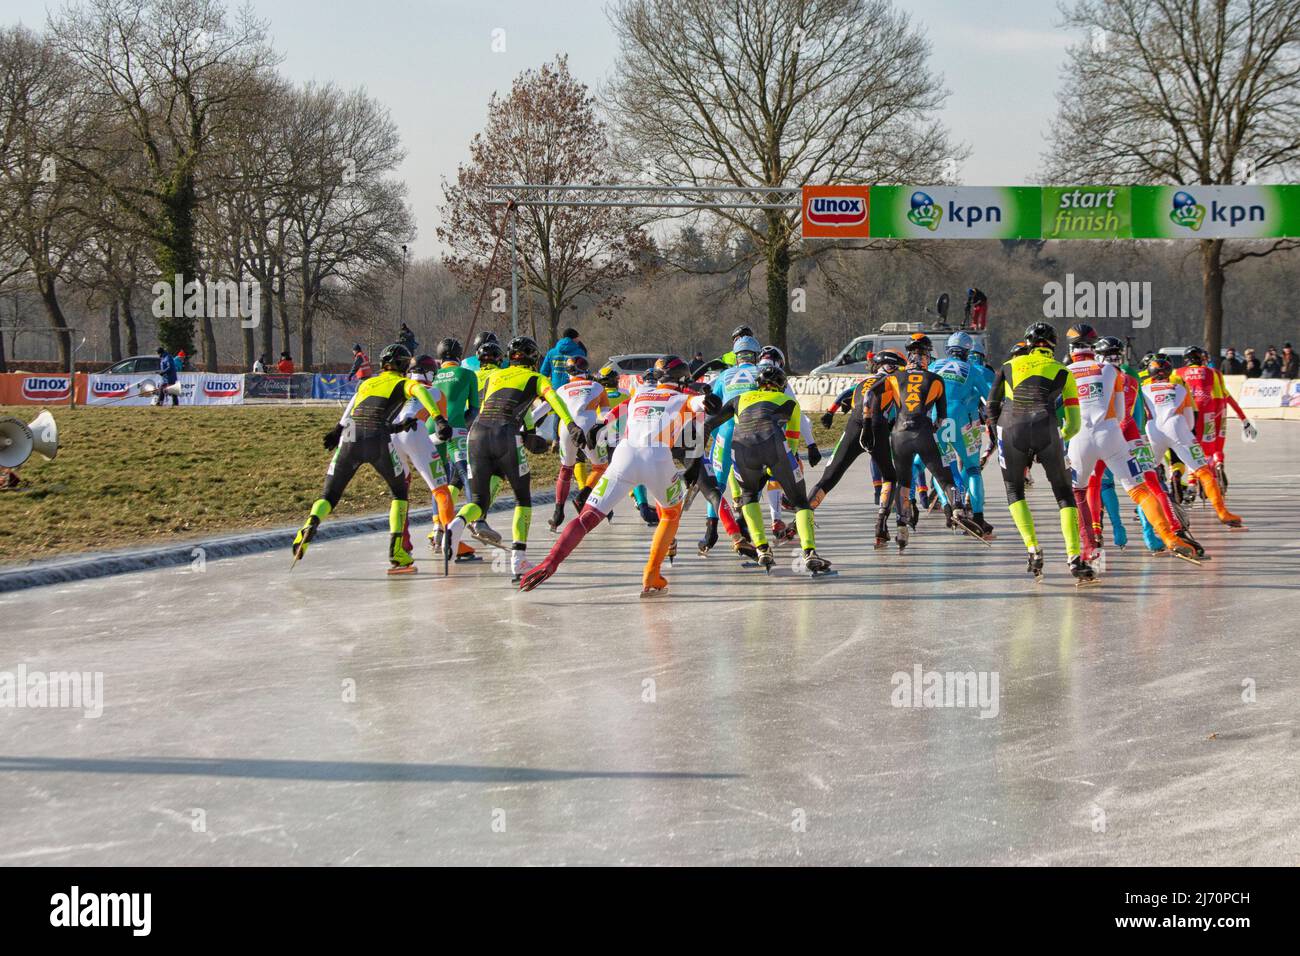 Marathon Ice speed skating on outdoor natural ice in Noordlaren in Drenthe, The Netherlands Stock Photo